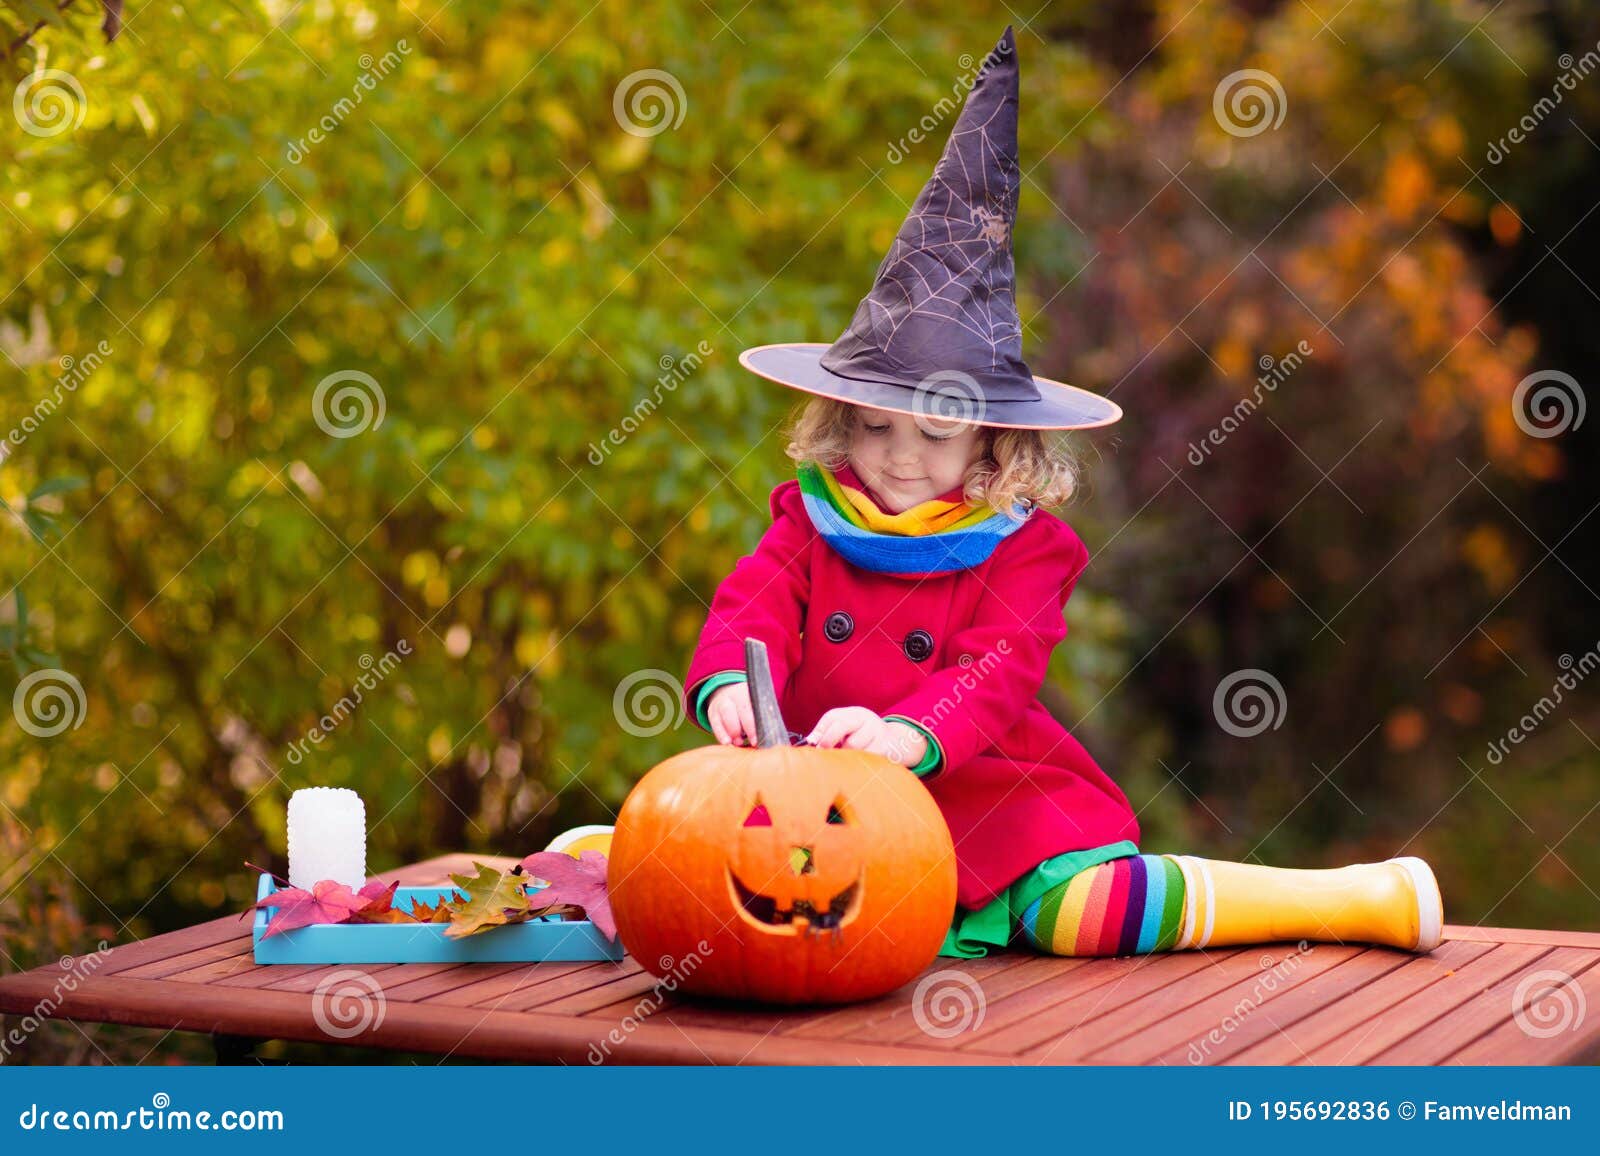 Kids Carving Halloween Pumpkin Stock Photo - Image of activity, funny ...